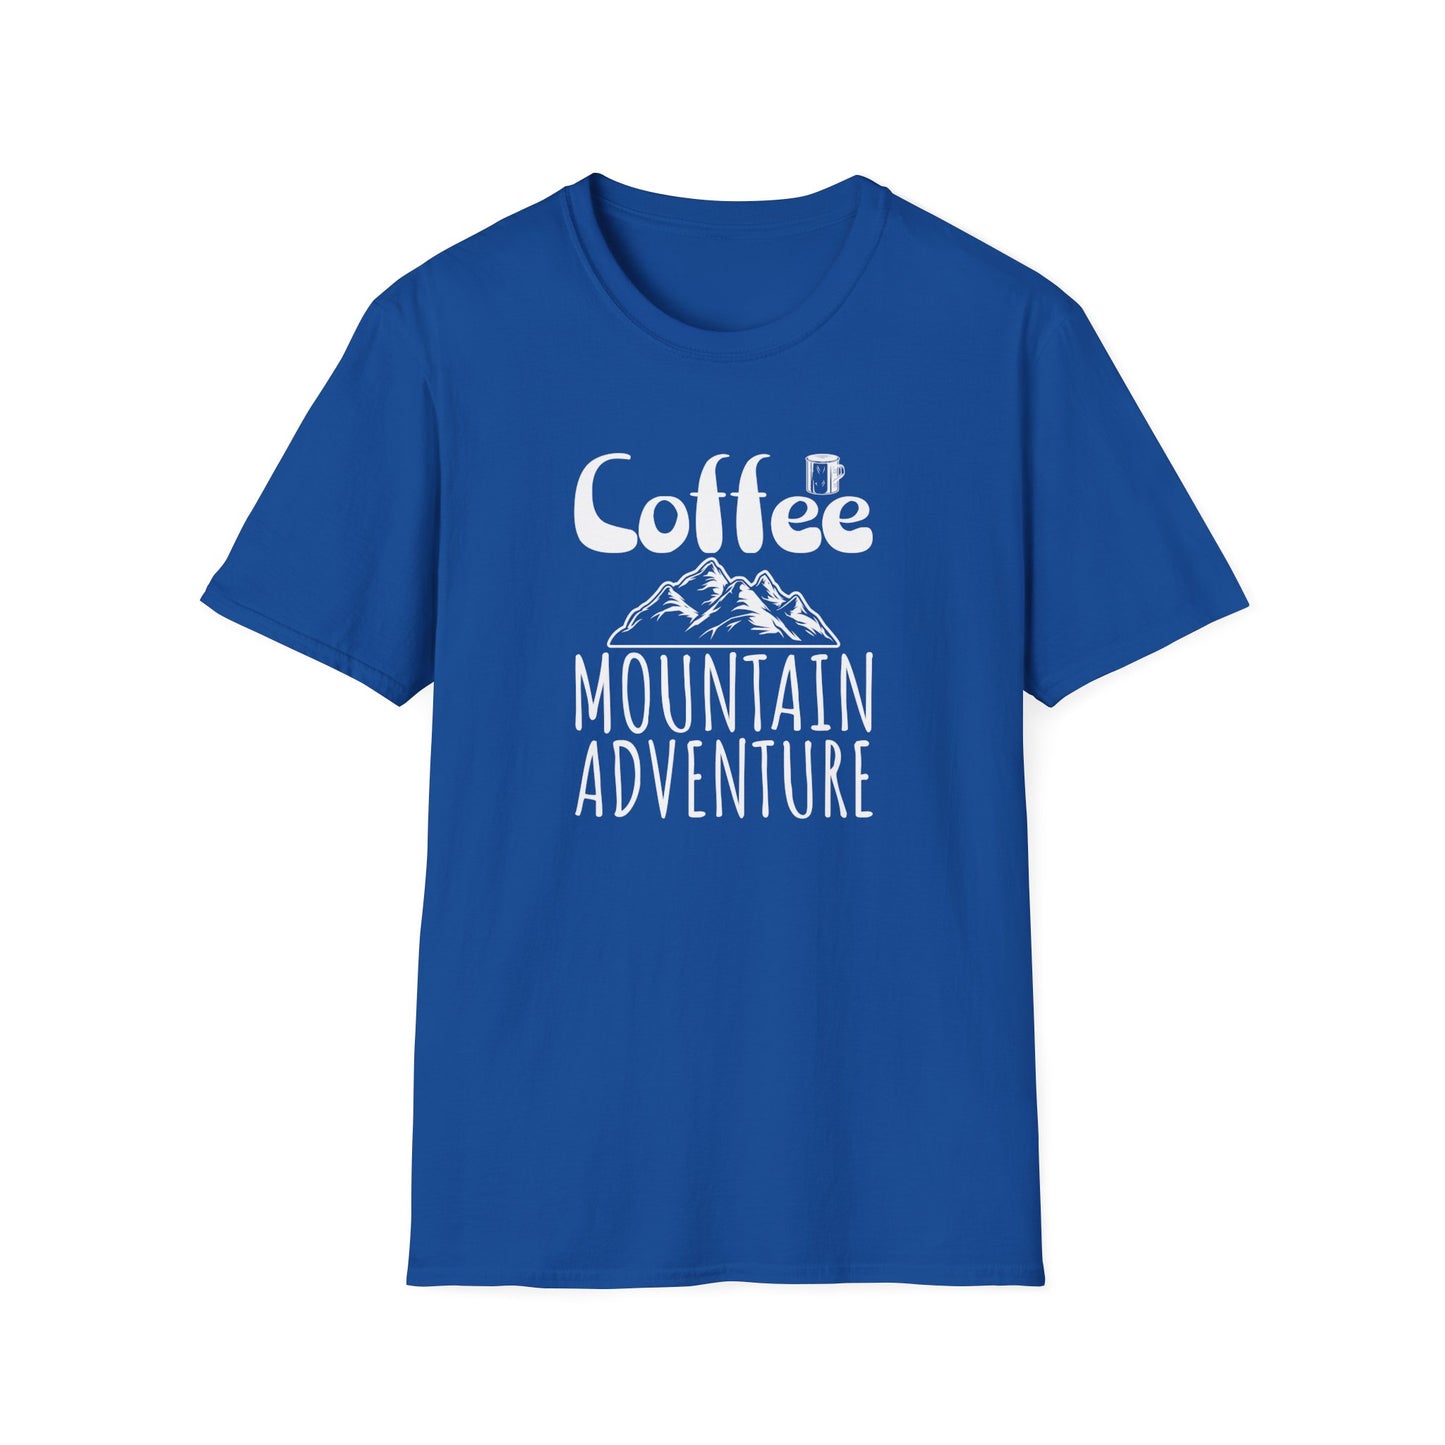 Coffee Mountain Adventure Tee: Explore Your Caffeine Peaks in Style!